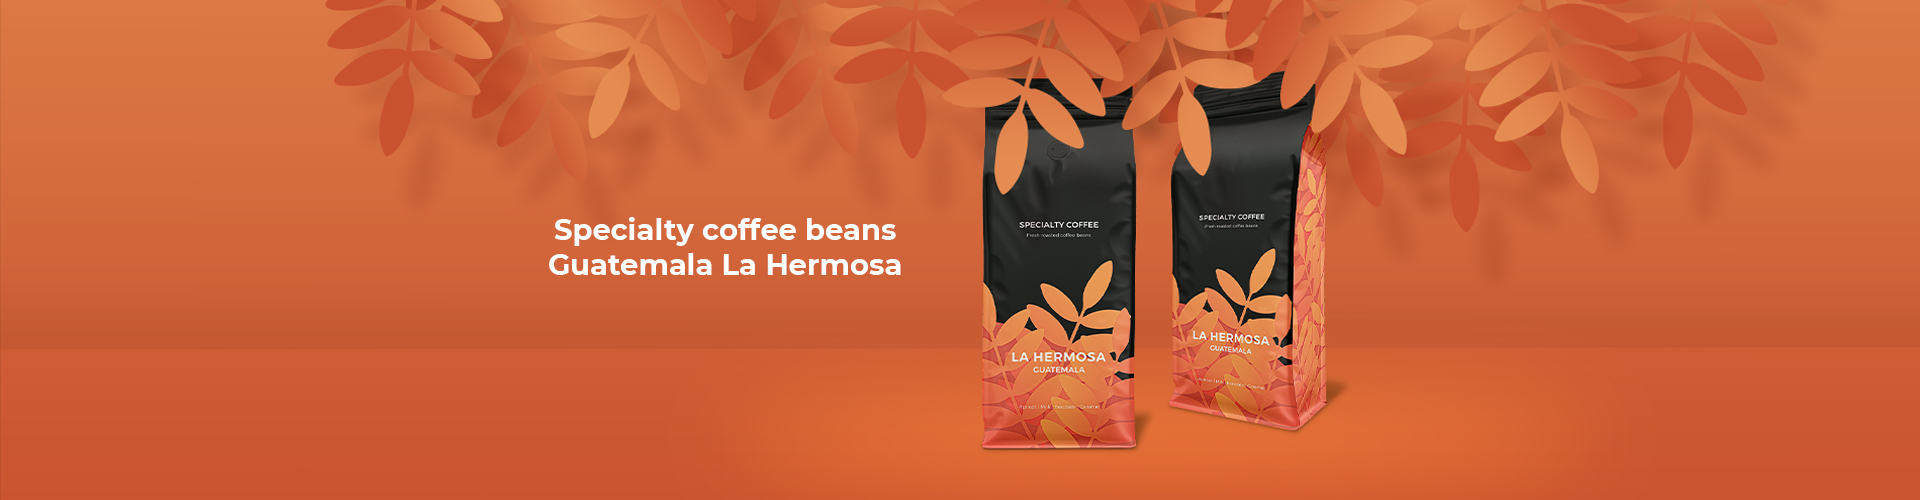 Specialty coffee beans Guatemala La Hermosa